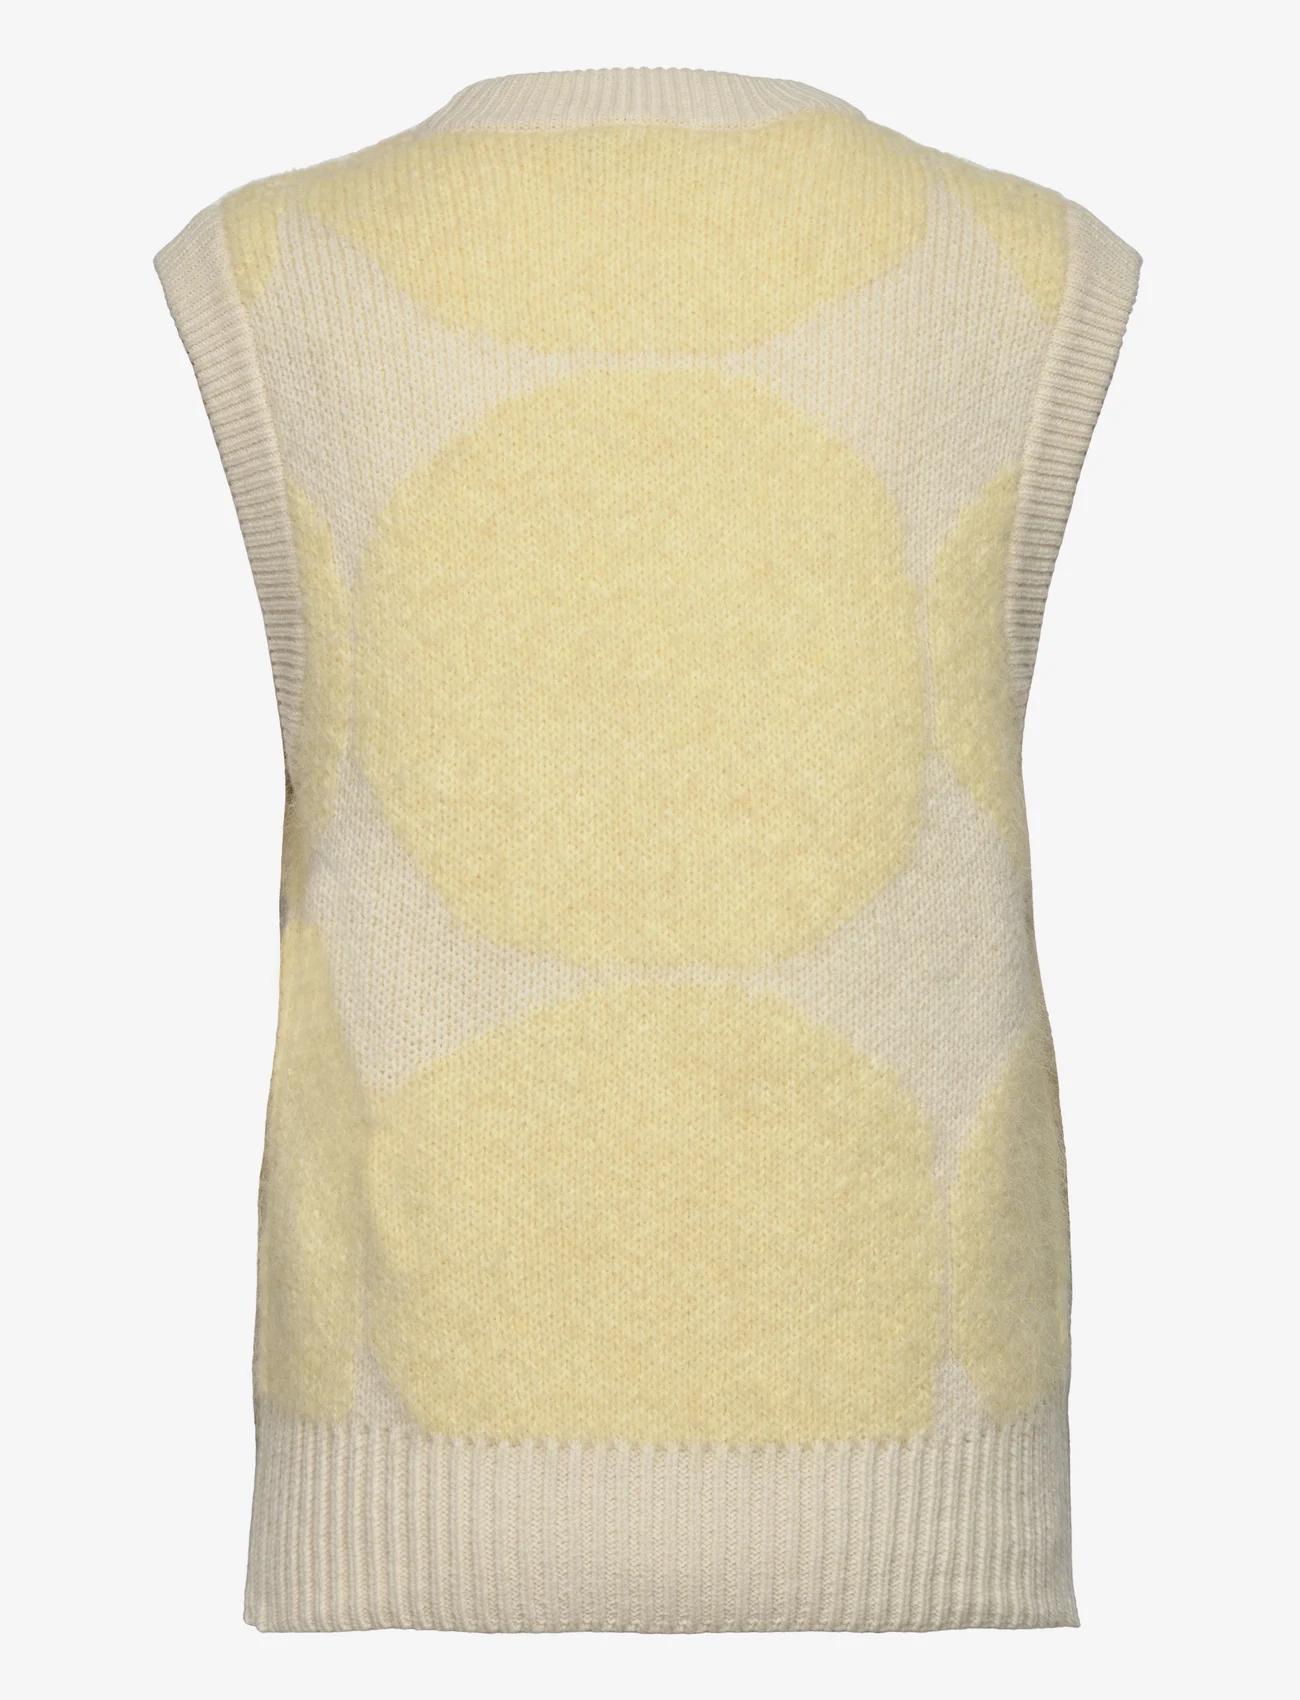 Marimekko - KRAPU KIVET - knitted vests - light yellow, off-white - 1